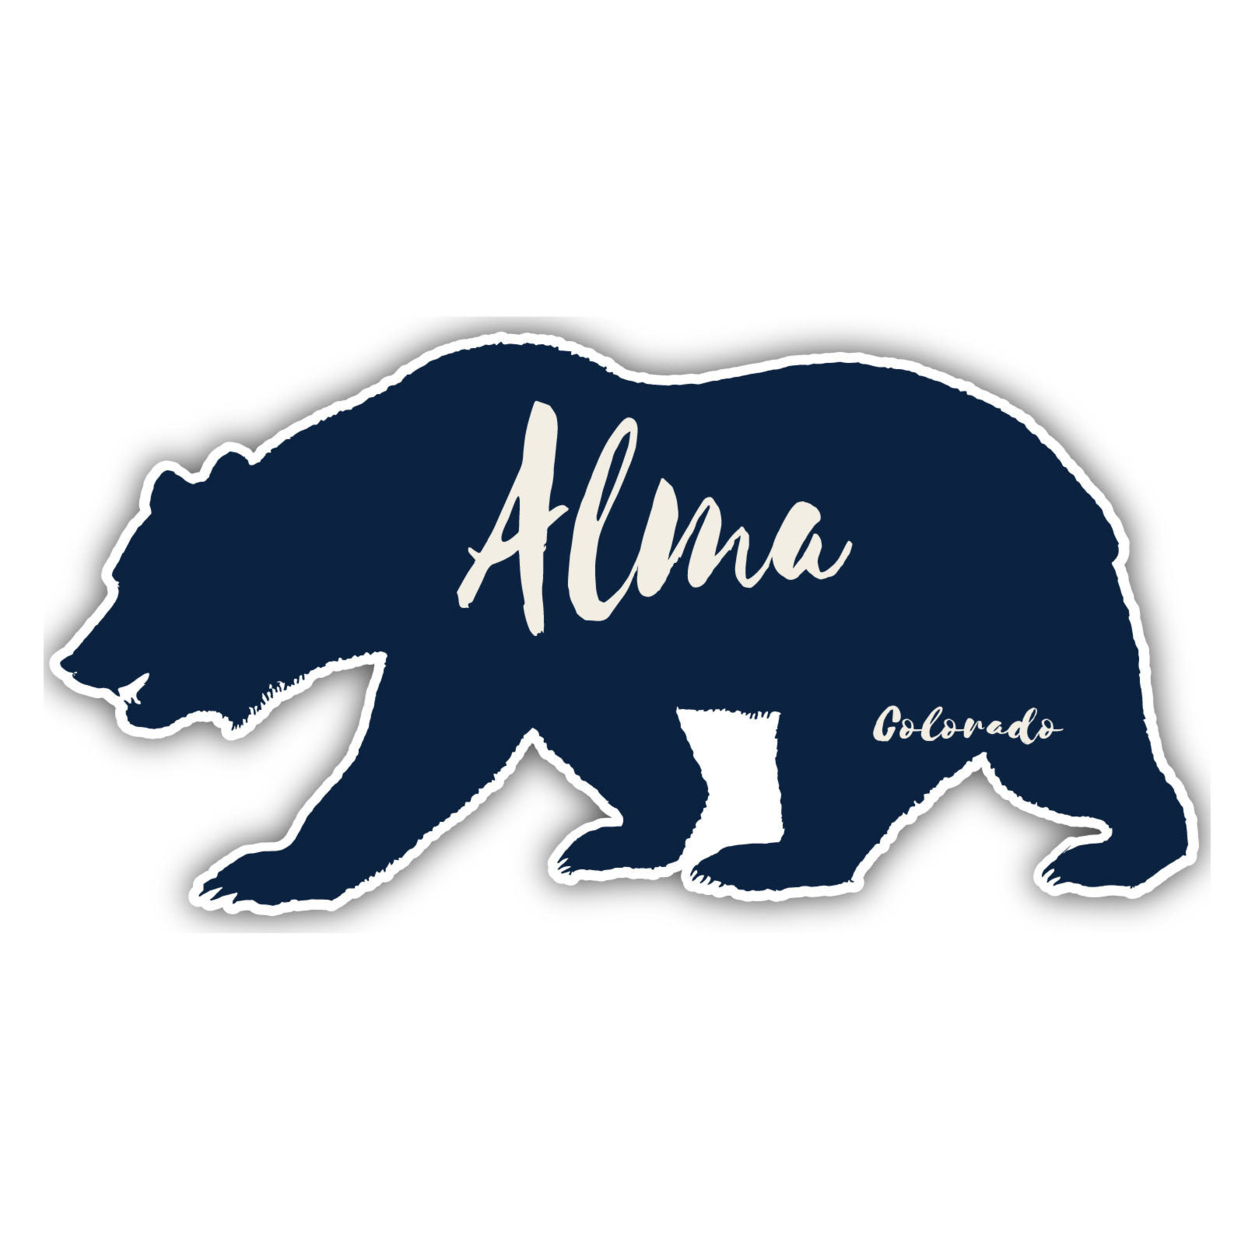 Alma Colorado Souvenir Decorative Stickers (Choose Theme And Size) - Single Unit, 4-Inch, Bear